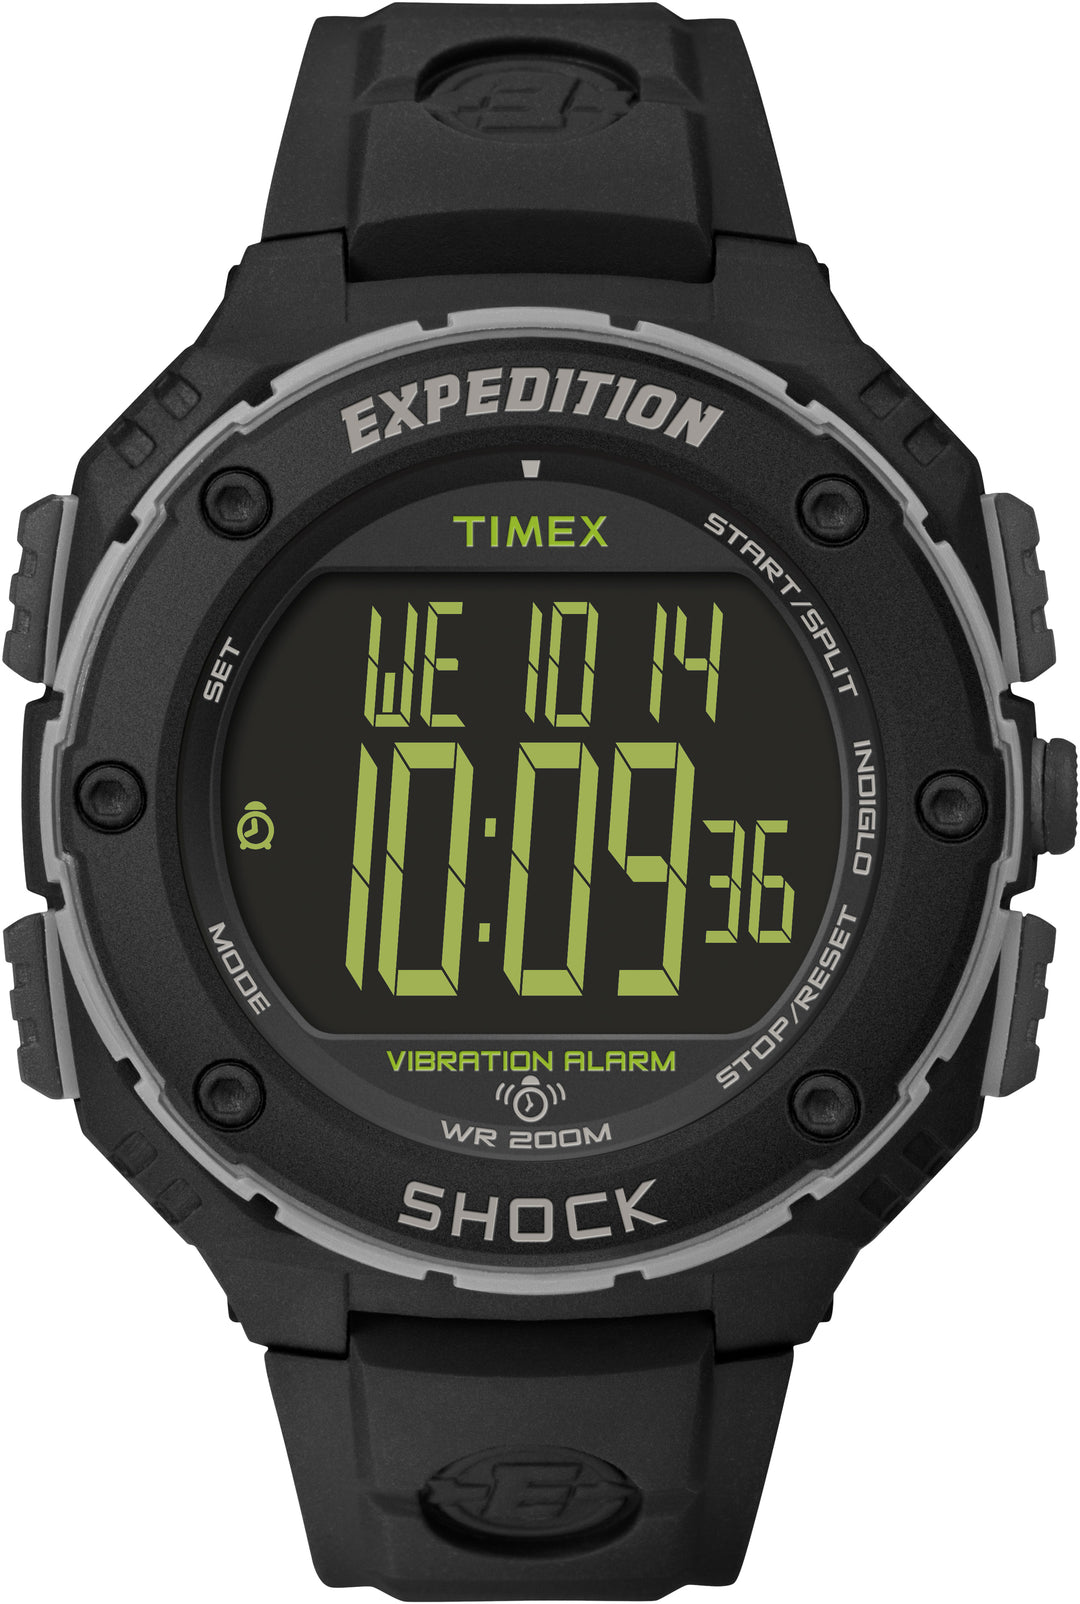 Timex Expedition Digital Watch